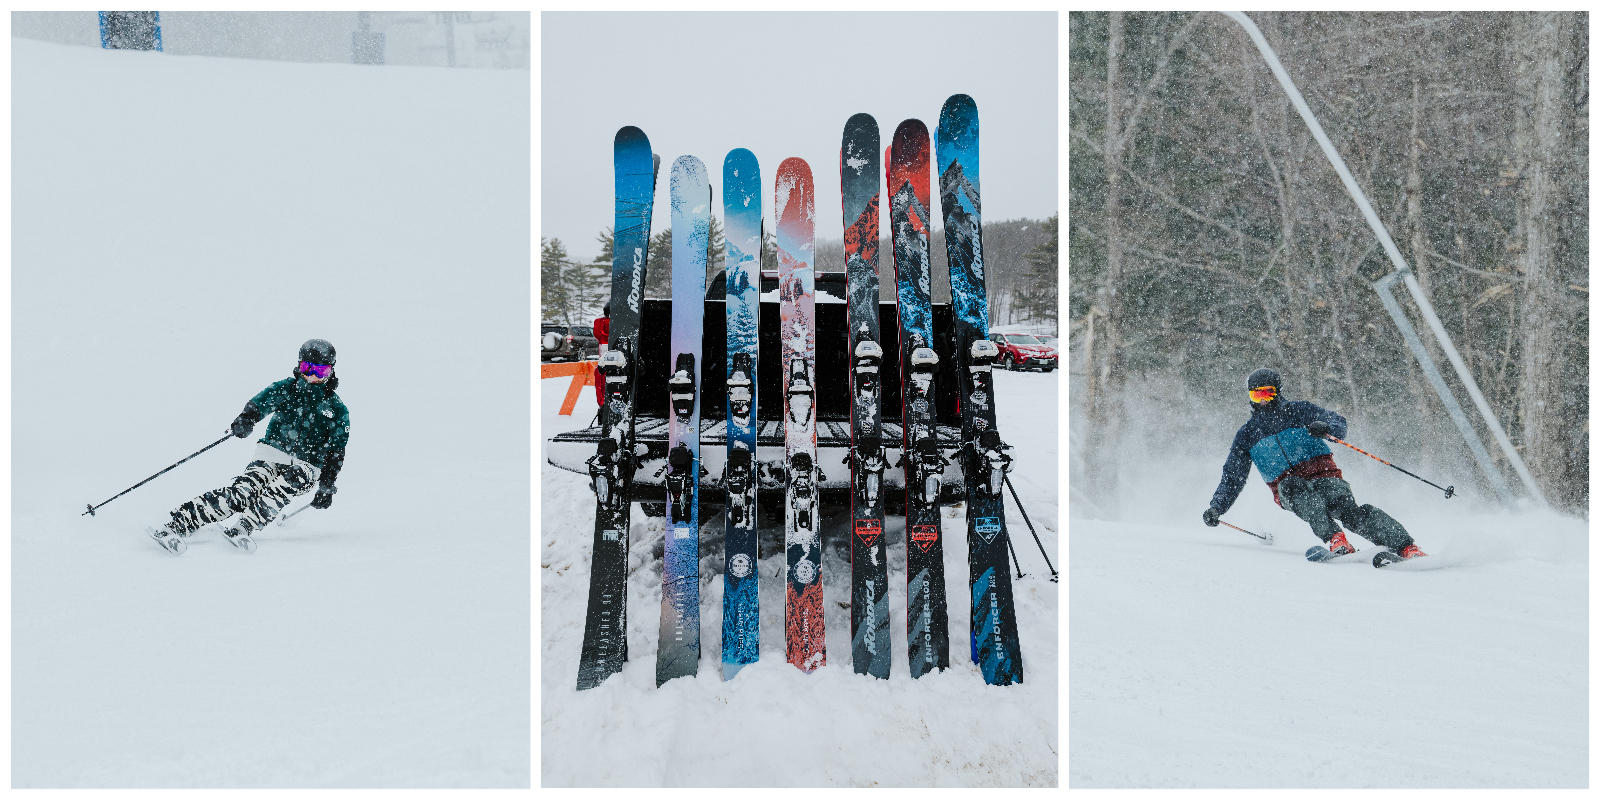 Skiing, ski test, skis, ski demo, winter, snow, snowboard, snowboarding, Burton, Nordica, Nordica Enforcer, Nordica Unleashed, Burton Step On, Nordica Santa Ana